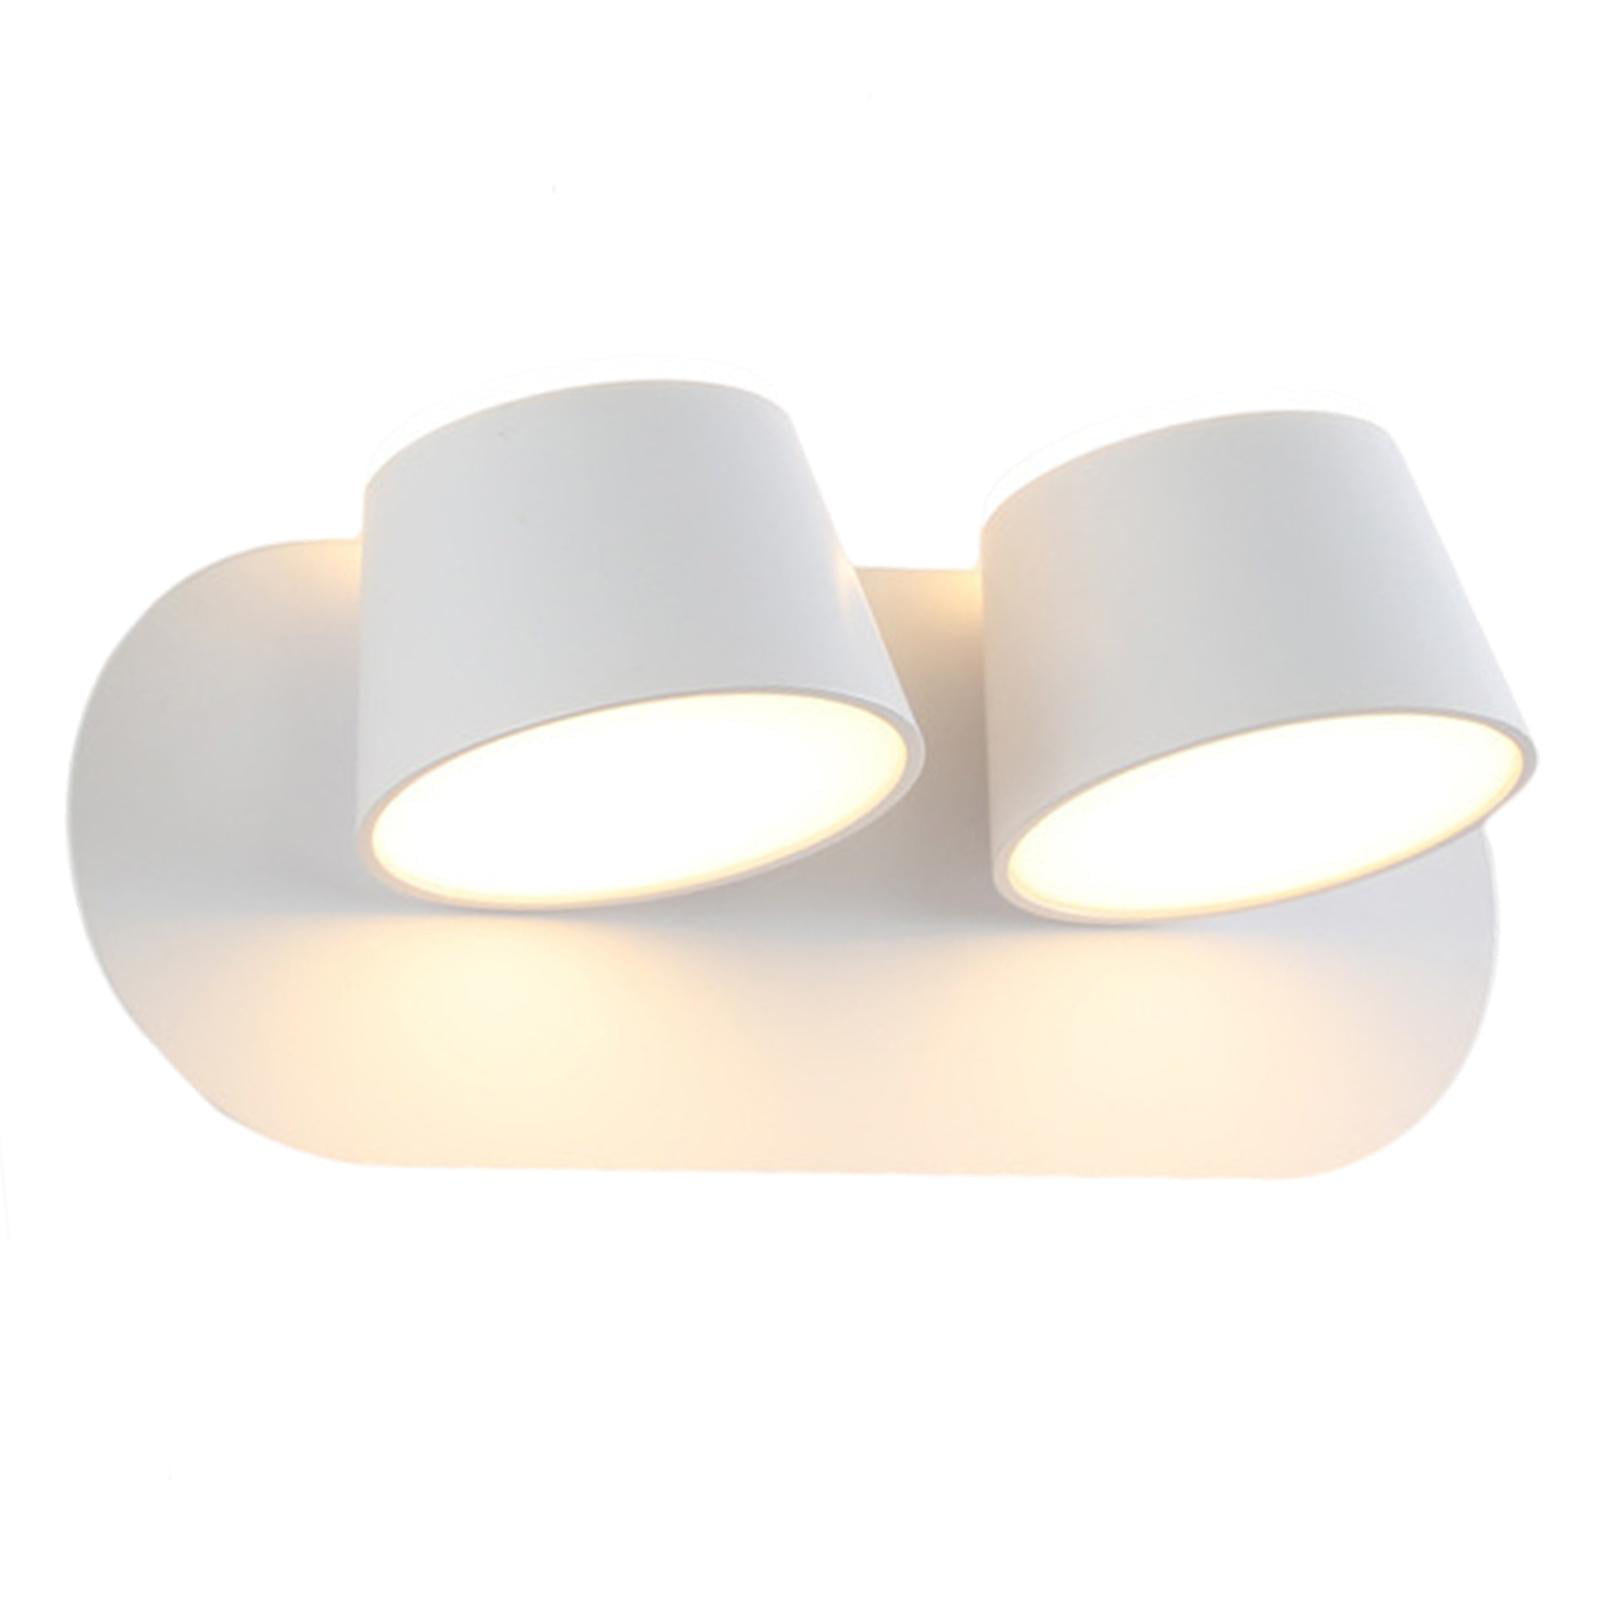 Details about   Simple Minimalist Wall Lamps Sconces Home Lighting Fixture Indoor Loft Decor 